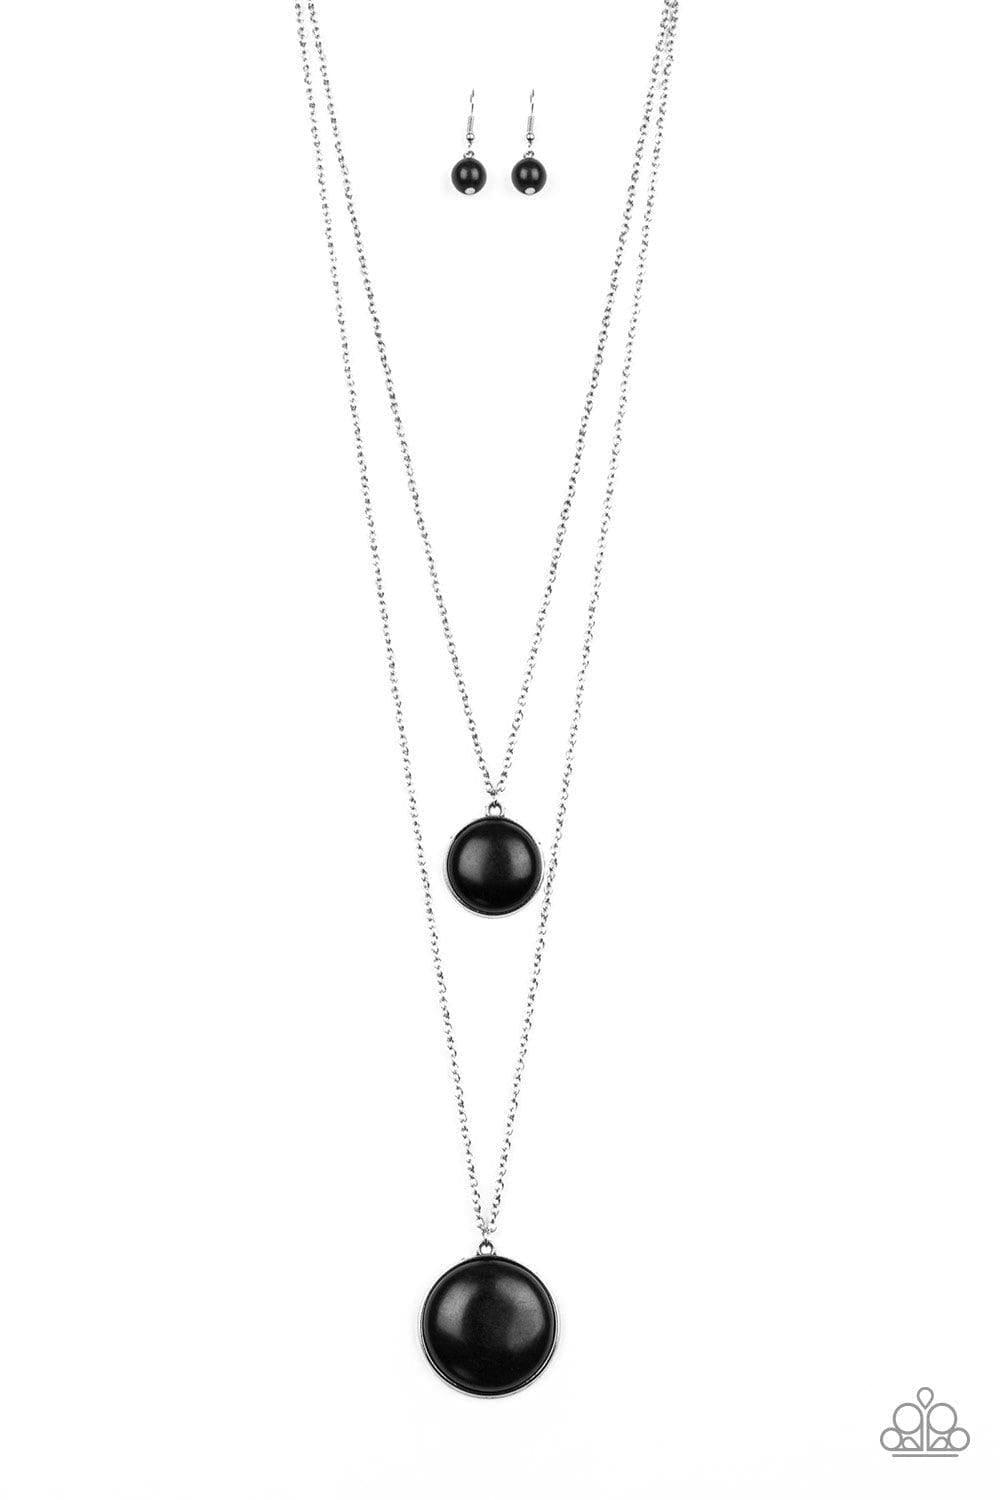 Paparazzi Accessories - Desert Medallions - Black Necklace - Bling by JessieK